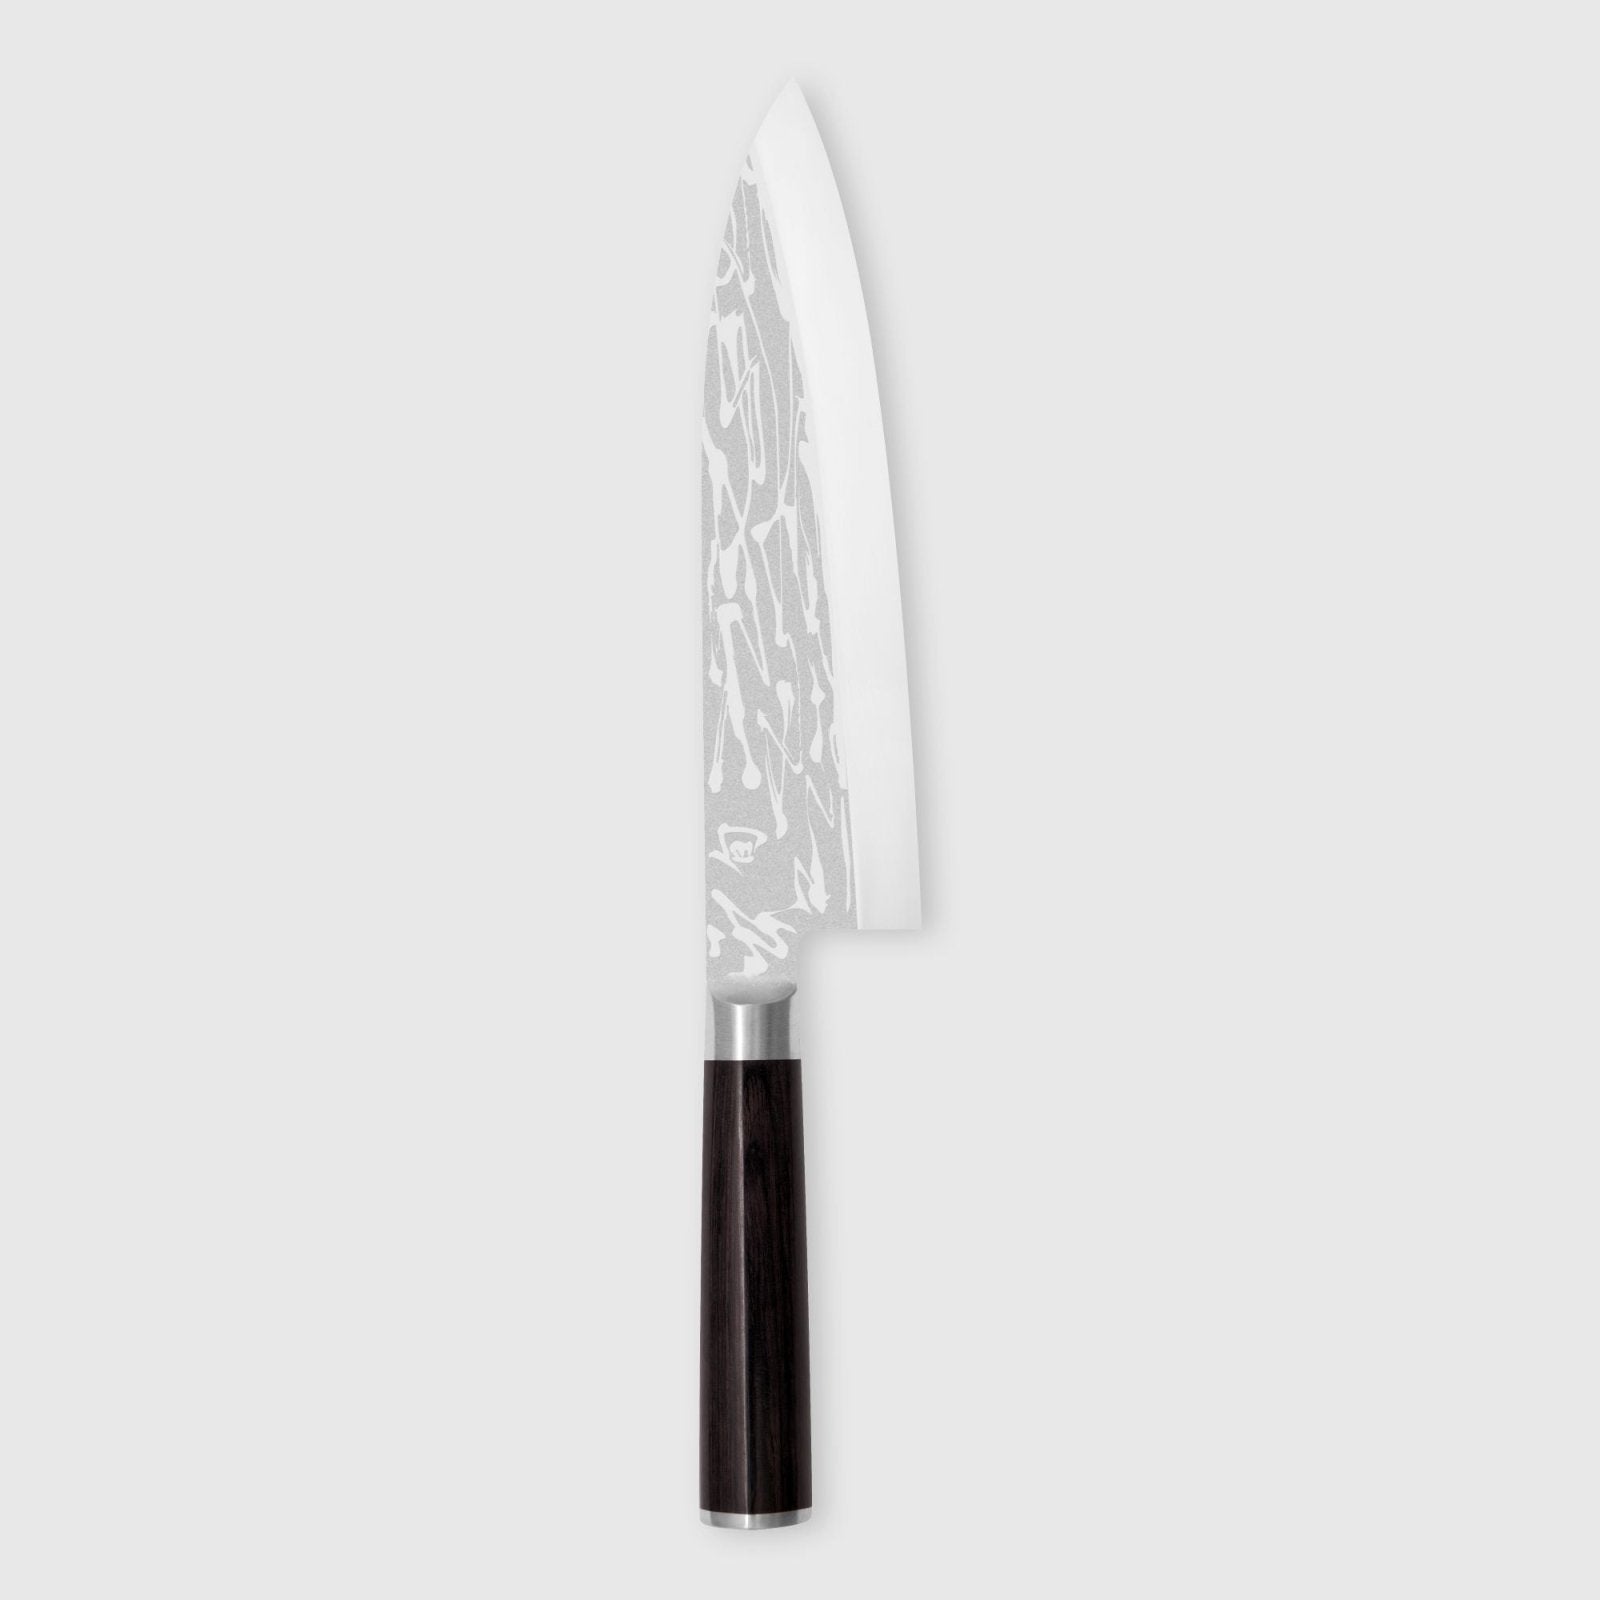 KAI Shun Pro Sho 21cm Deba Knife - KAI-VG-0003 - The Cotswold Knife Company